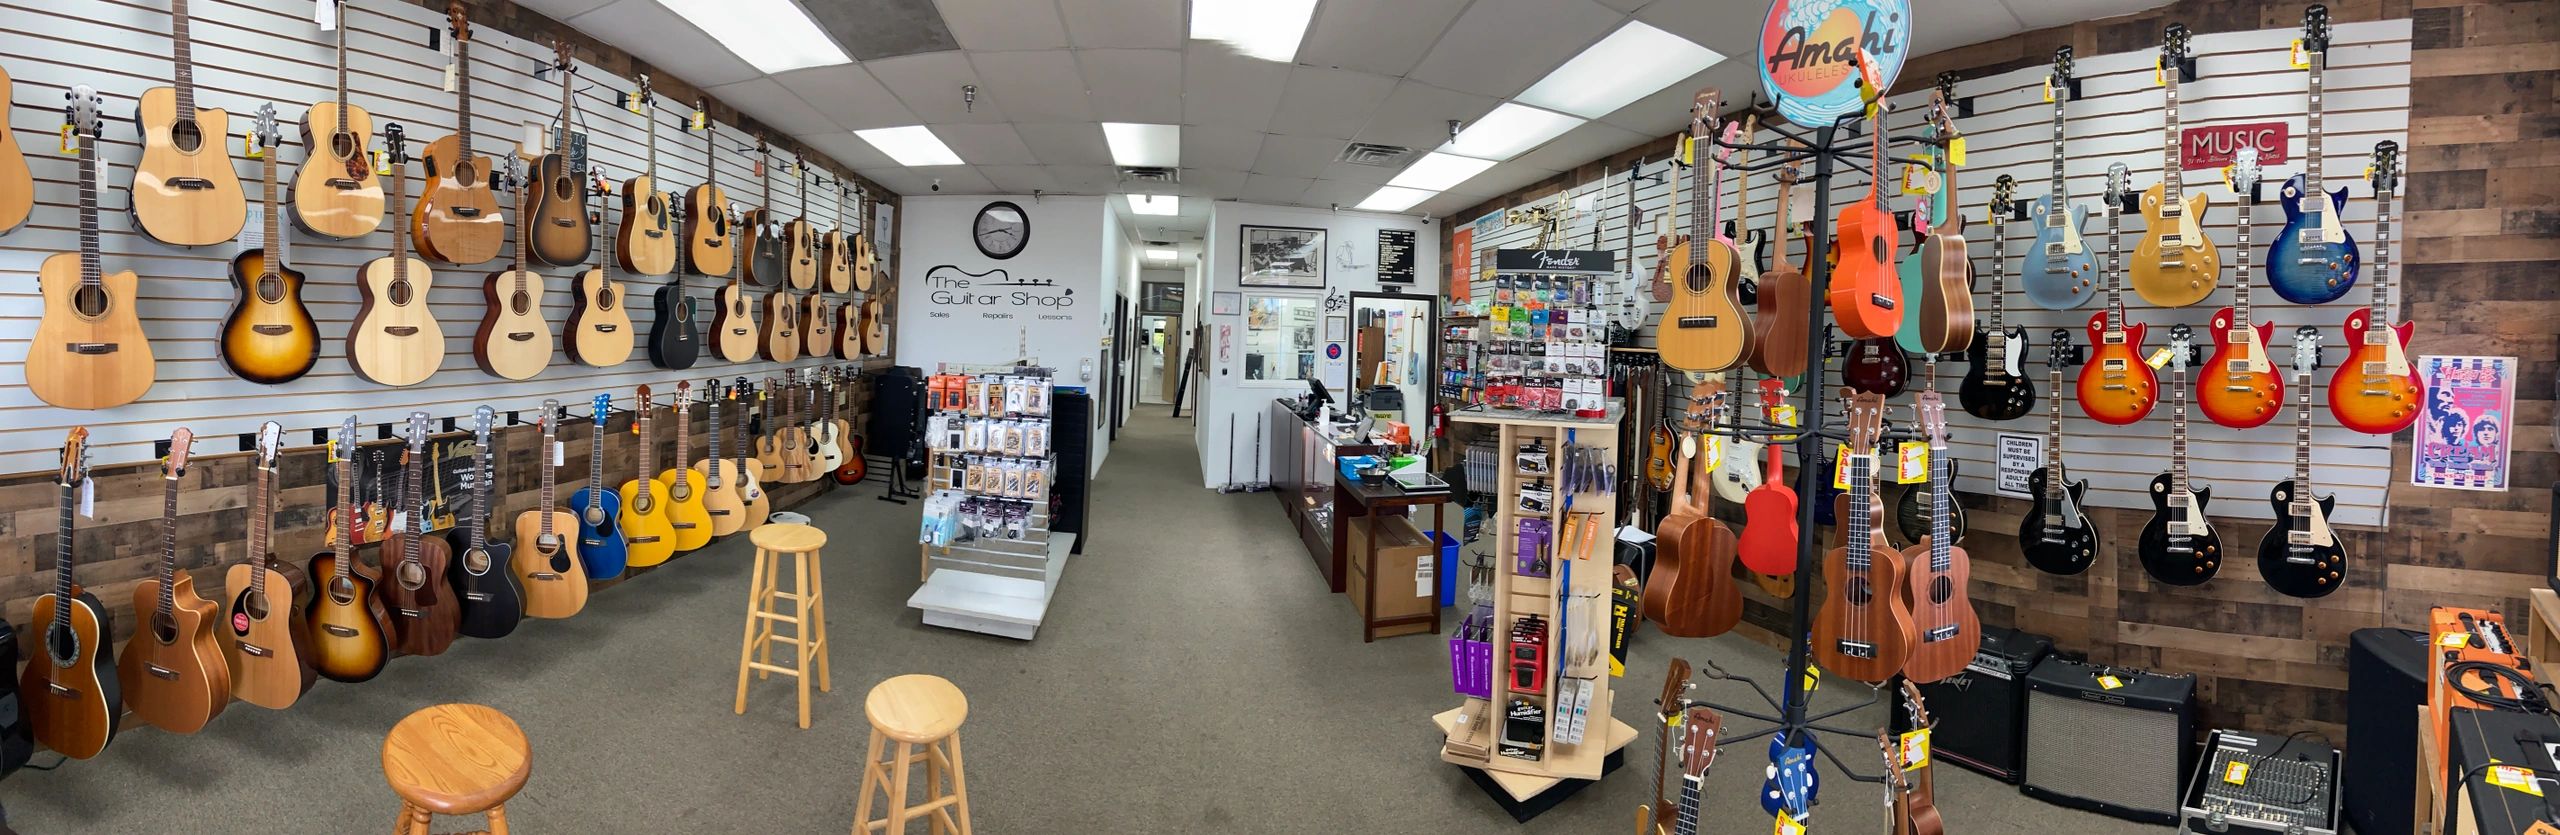 The Guitar Shop - Guitar Shop, Store